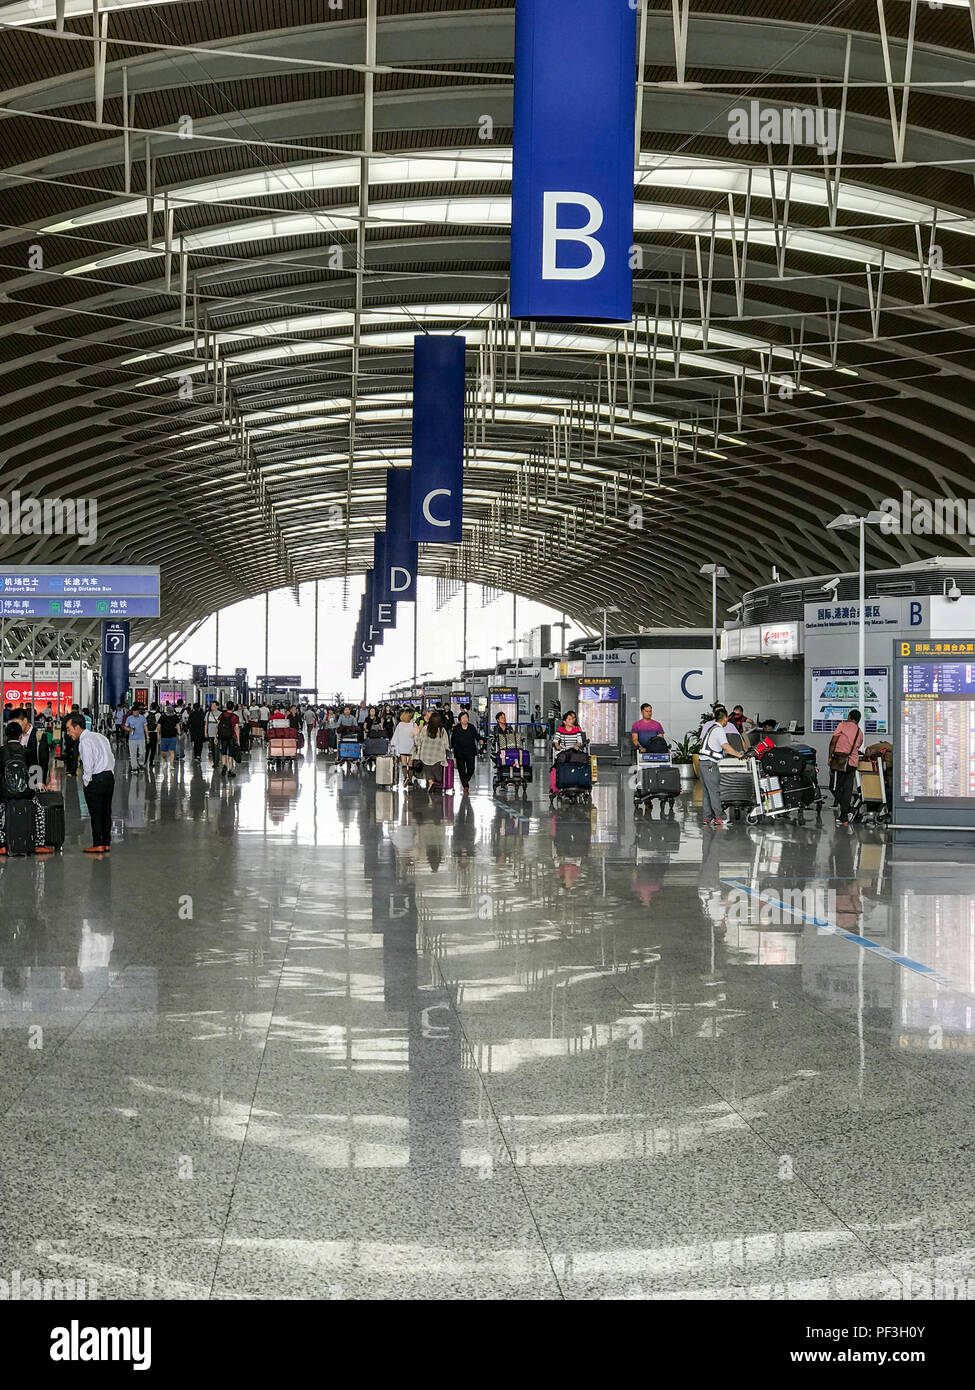 Shanghai, Jiangsu, China.  Shanghai Pudong Airport, Departures Hall. Stock Photo